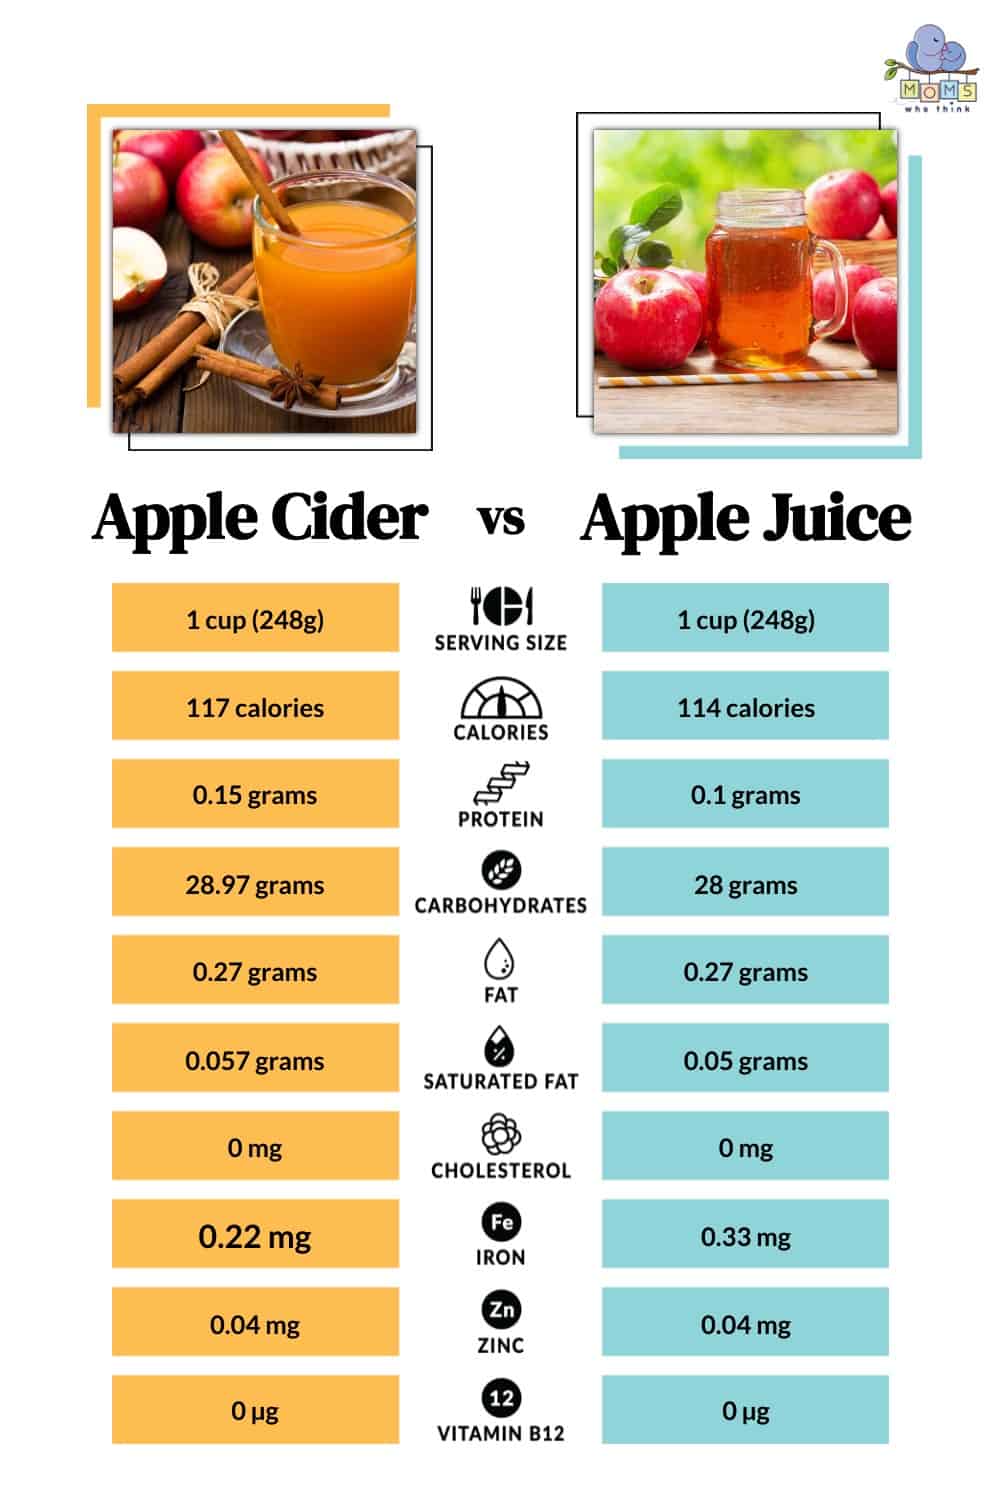 Apple Cider vs Apple Juice Nutritional Facts